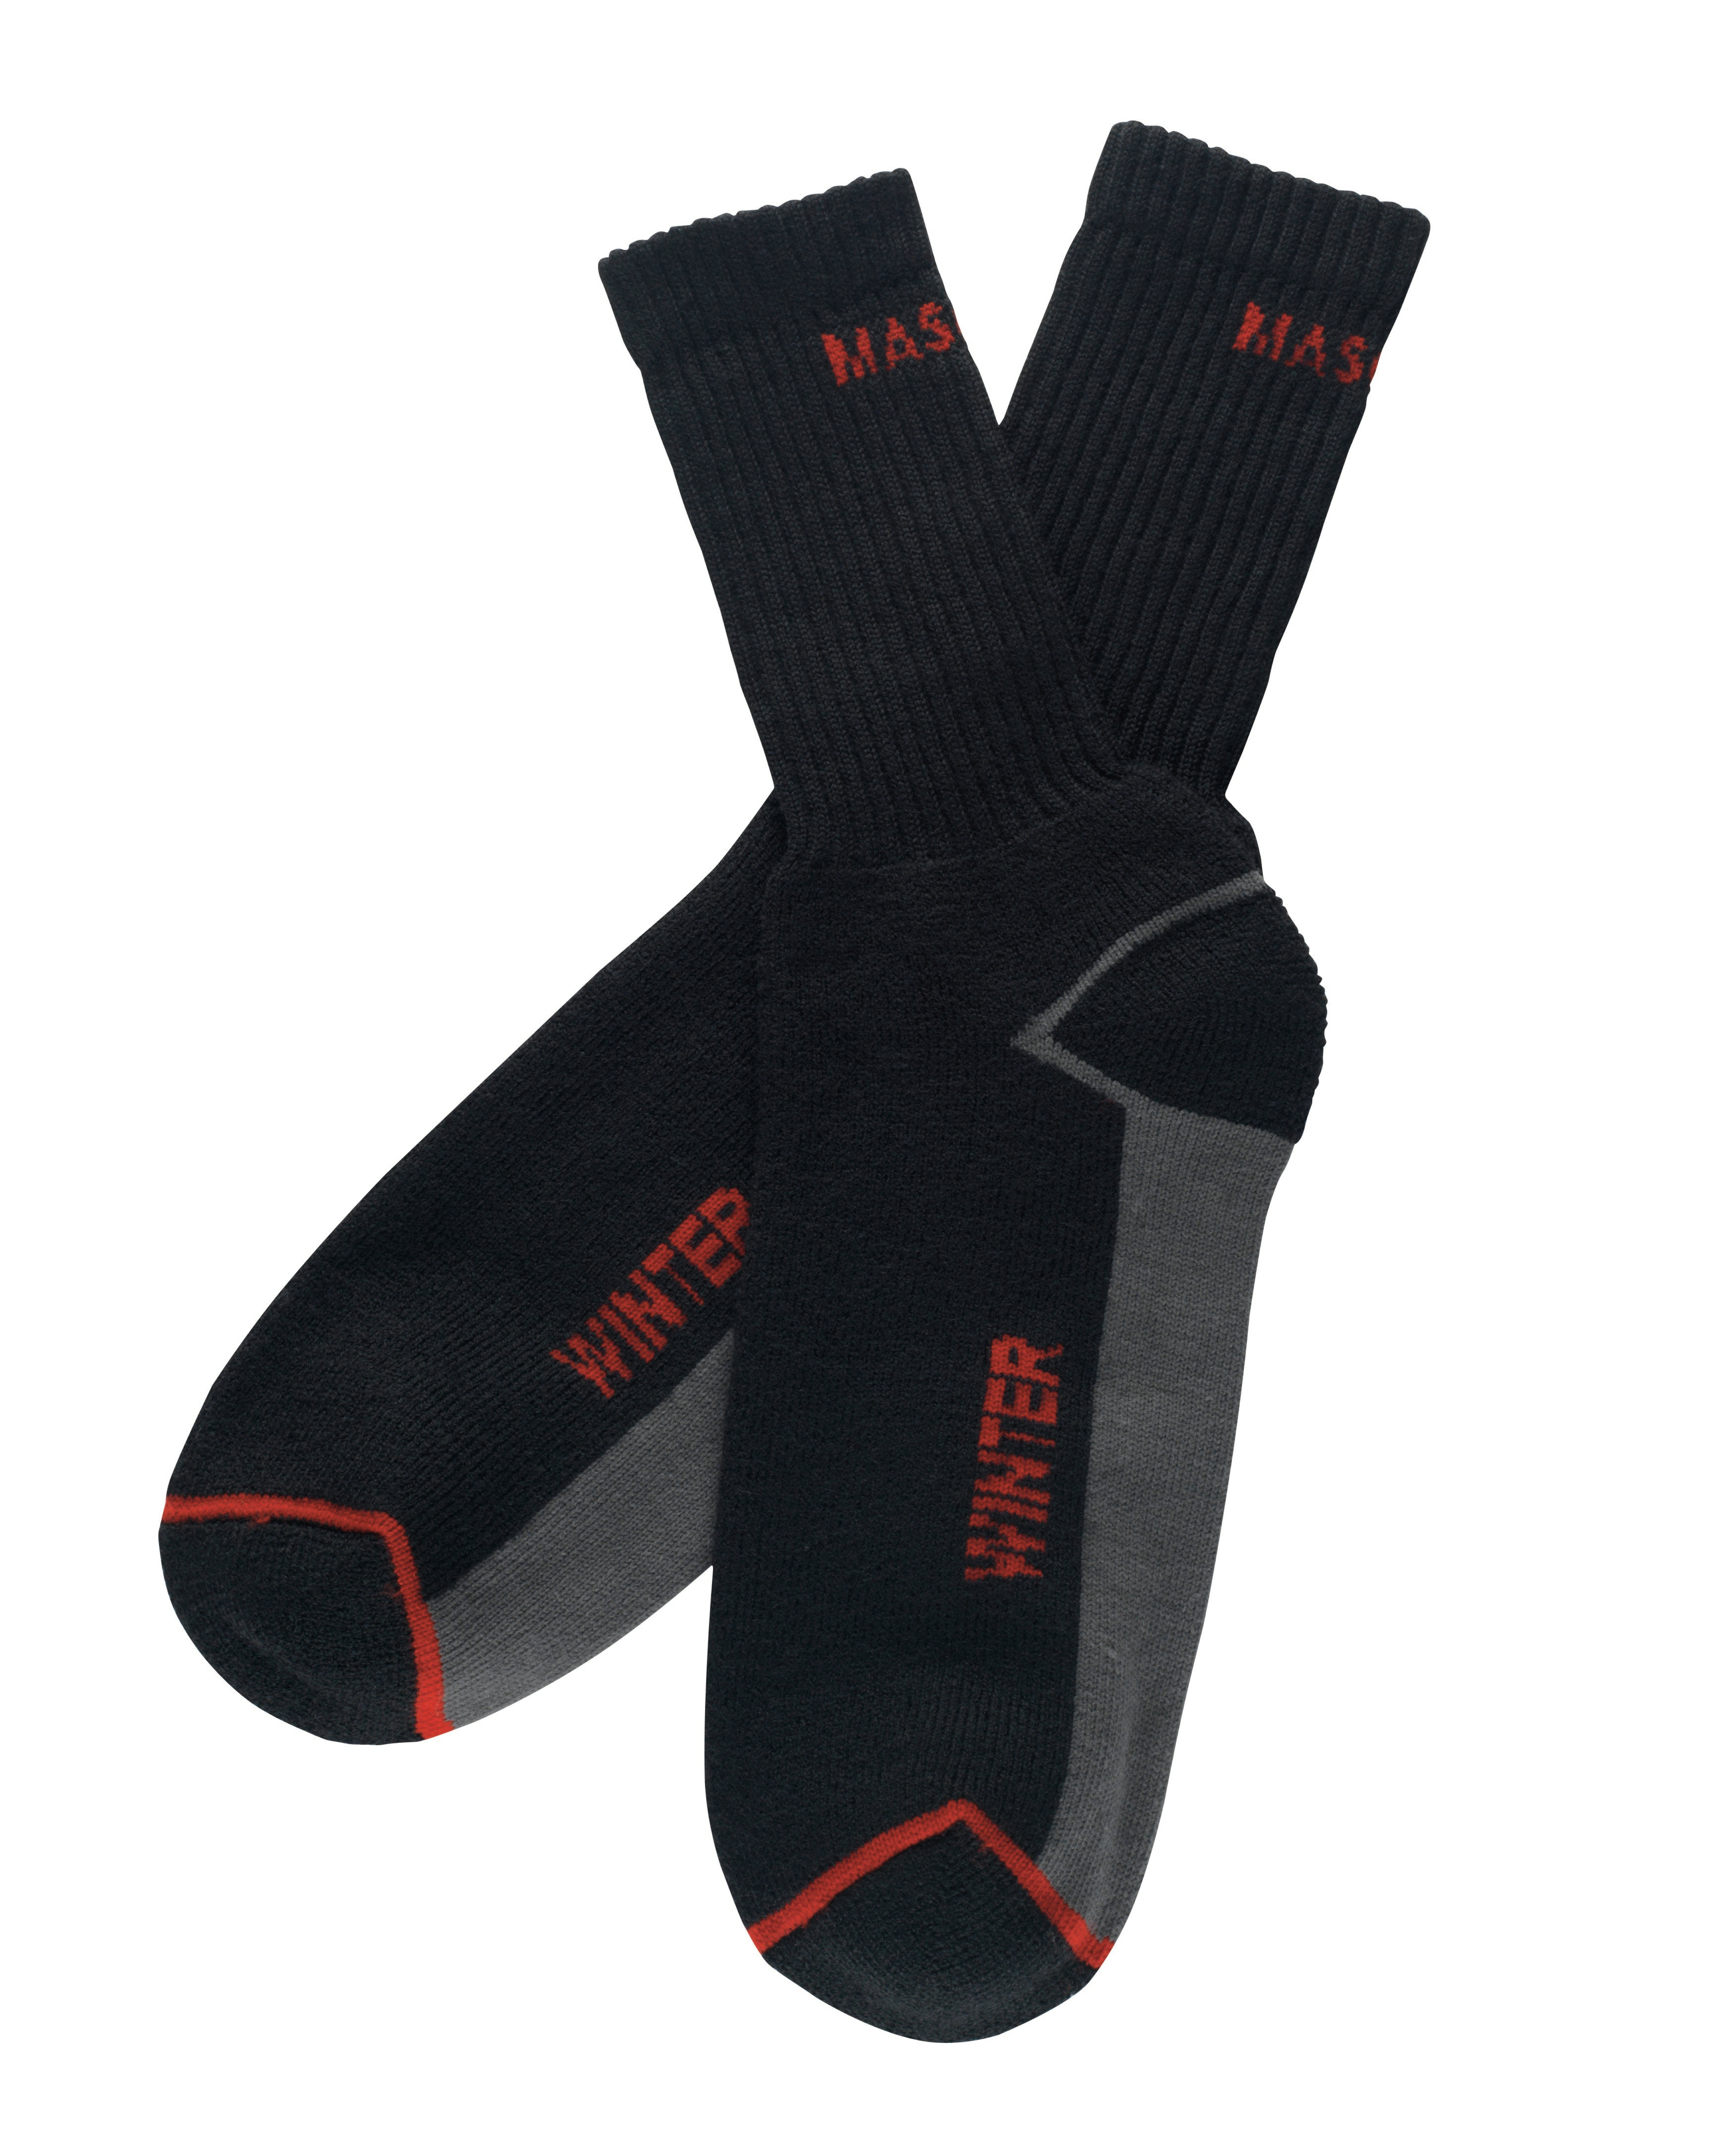 MASCOT Compete Socken "Kisumu" Nr. 50455-914-09